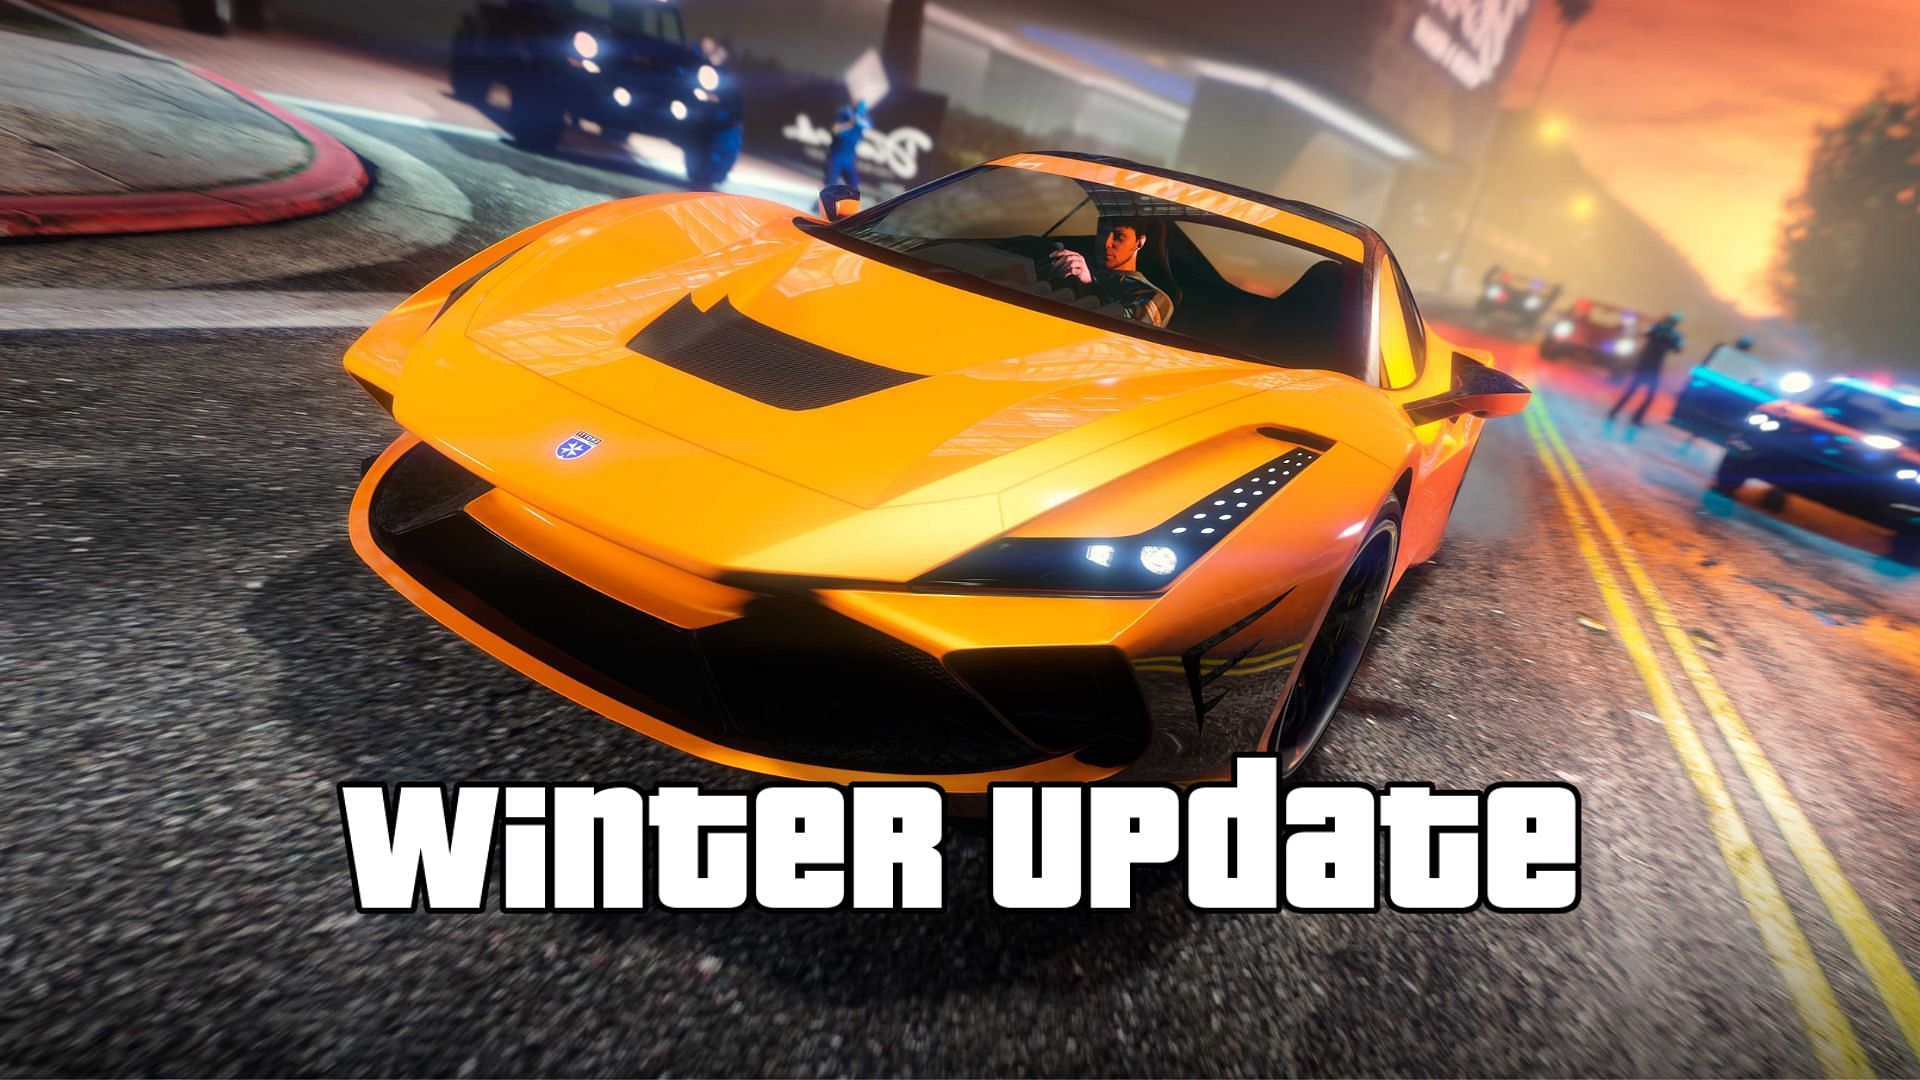 GTA 5 Update 1.45 Brings Loads of Improvements This December 13